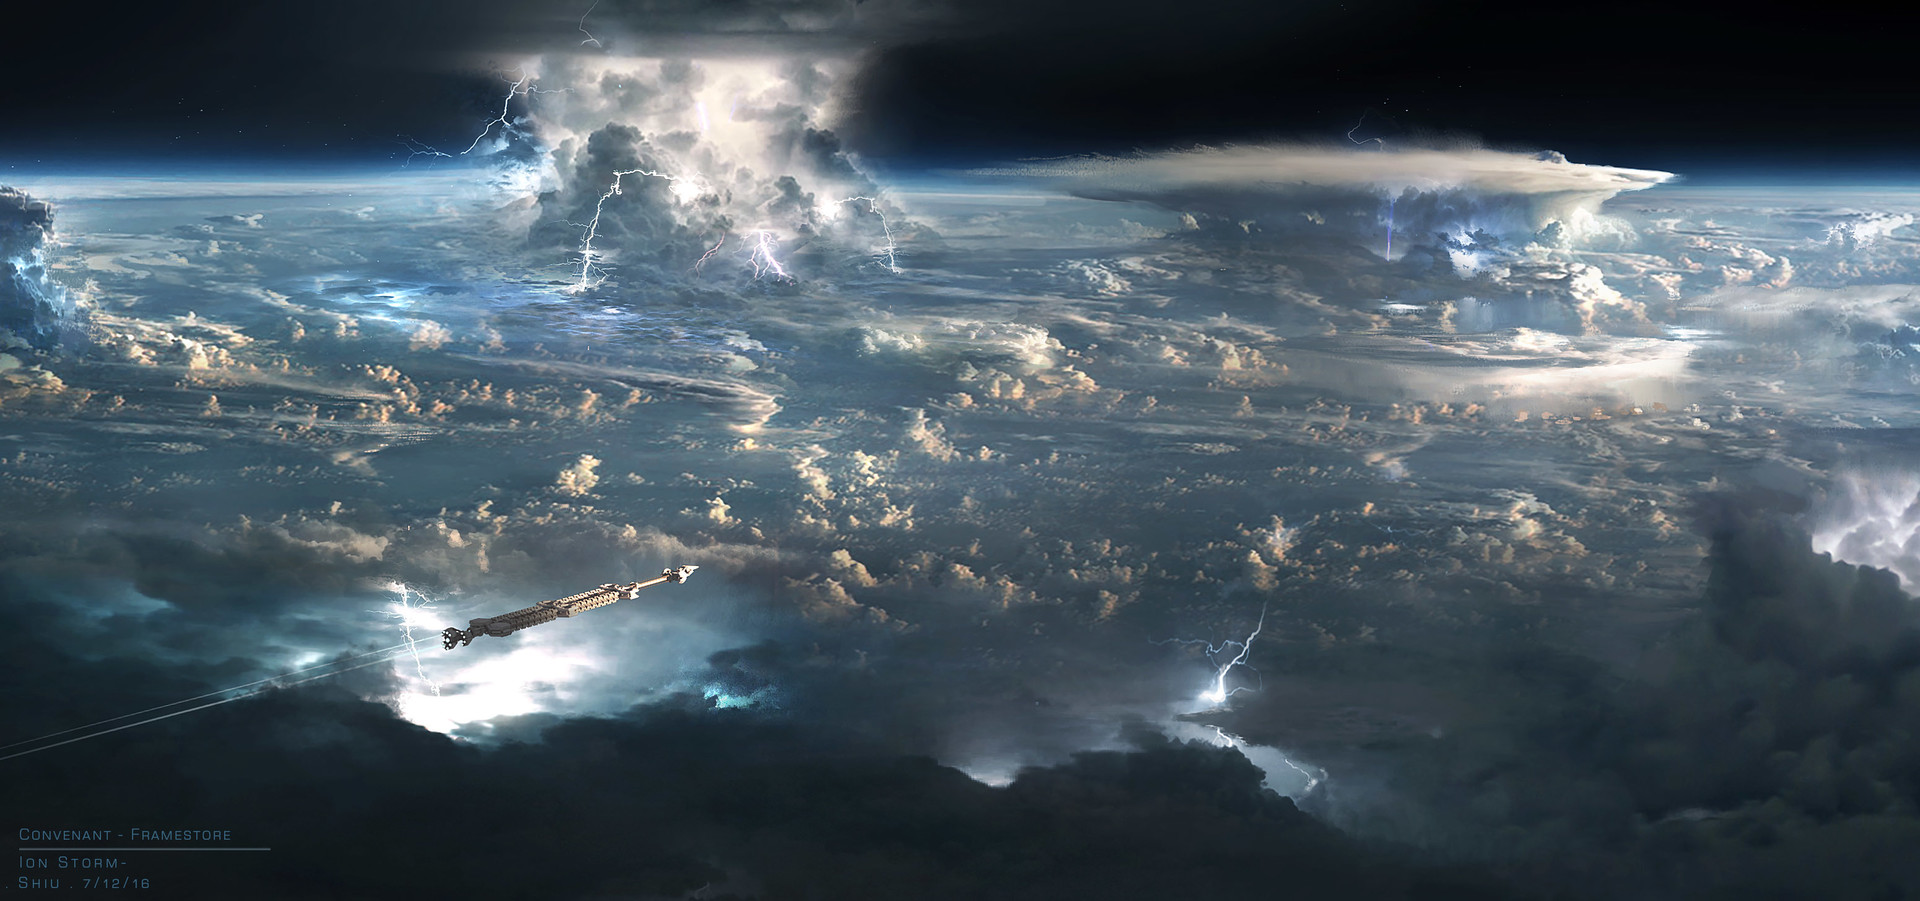 Digital Art Fantasy Art Spaceship Clouds Storm Lightning Emmanuel Shiu Space Alien Covenant Fan Art 1920x901